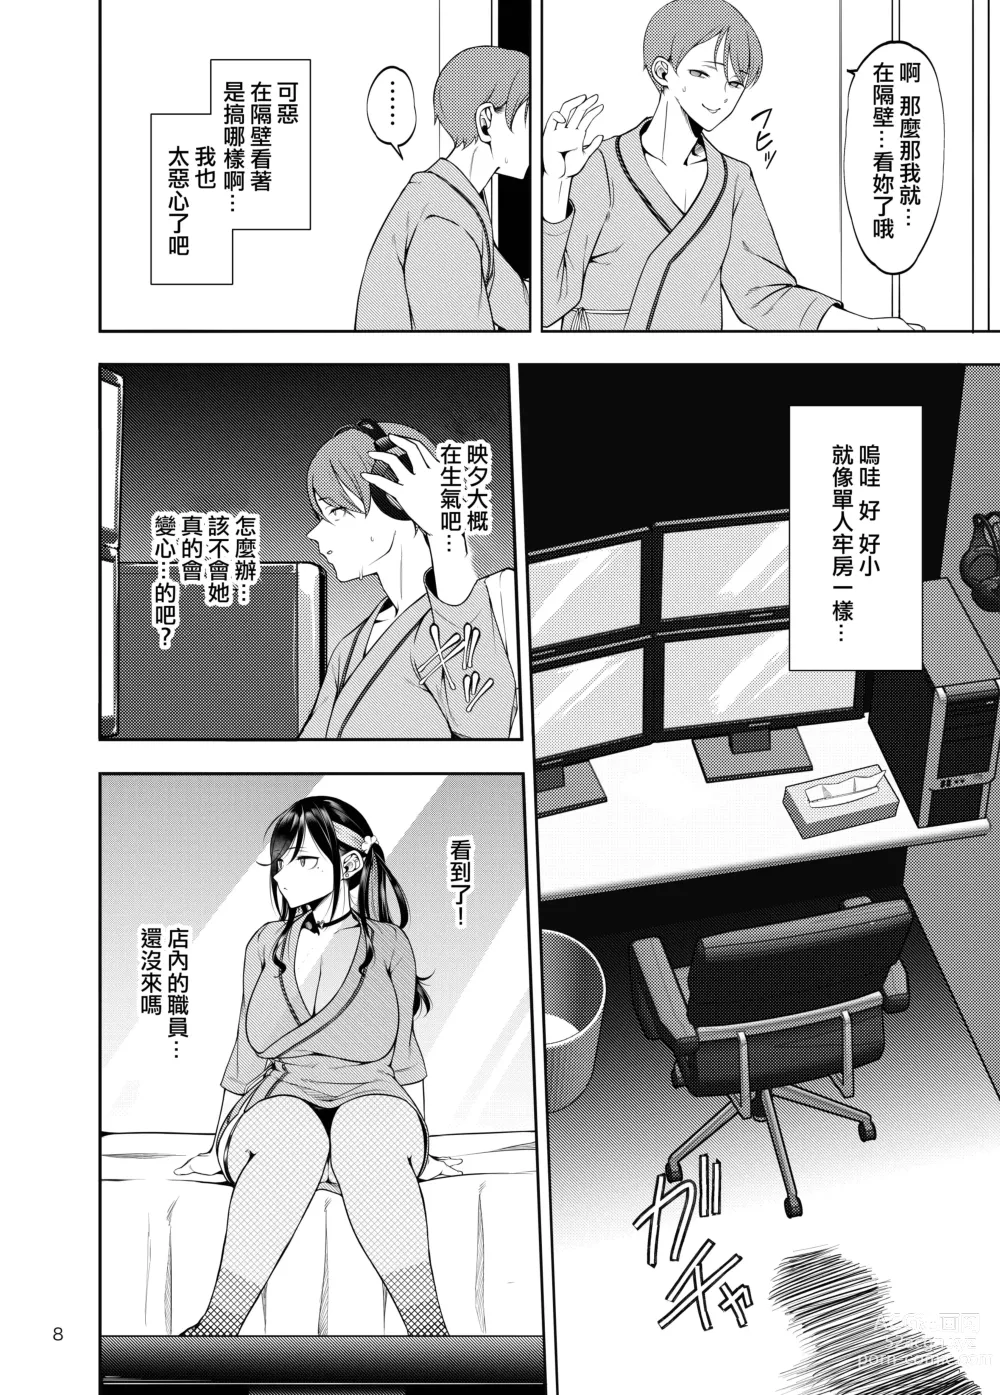 Page 9 of doujinshi 真不該把女朋友帶去NTR風俗店